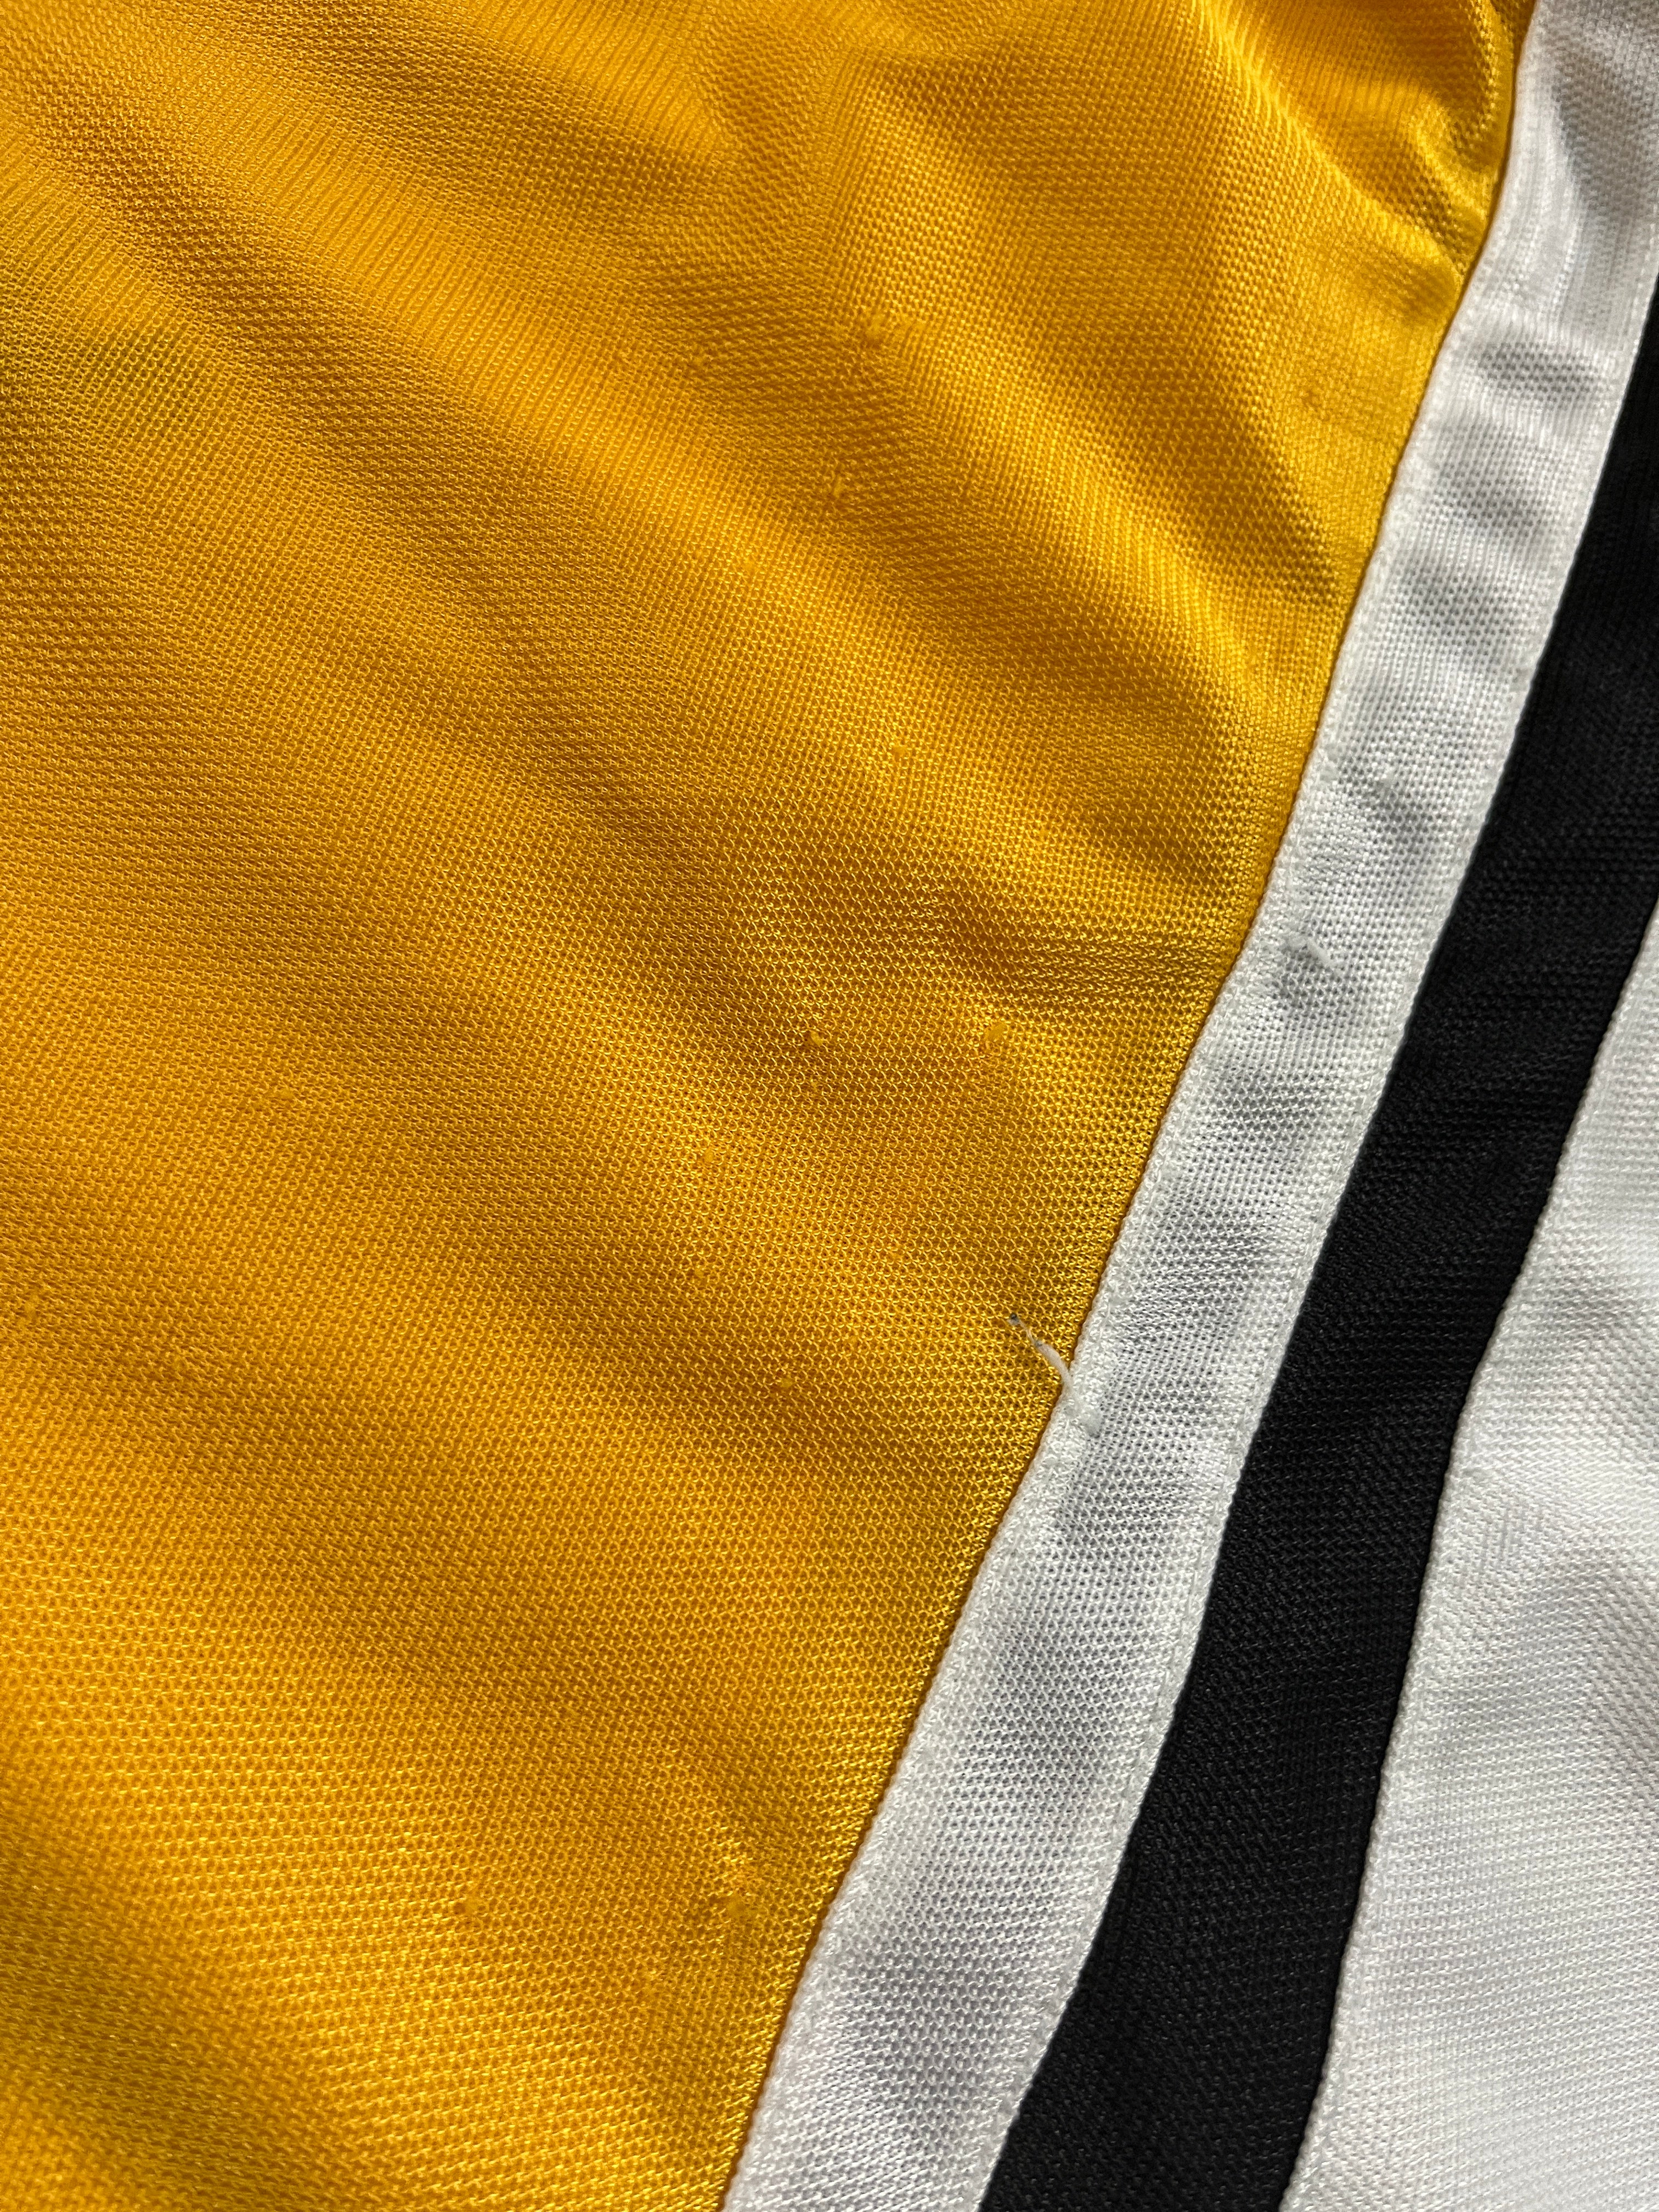 Vintage Tiger Jersey TShirt Yellow // Large - RHAGHOUSE VINTAGE